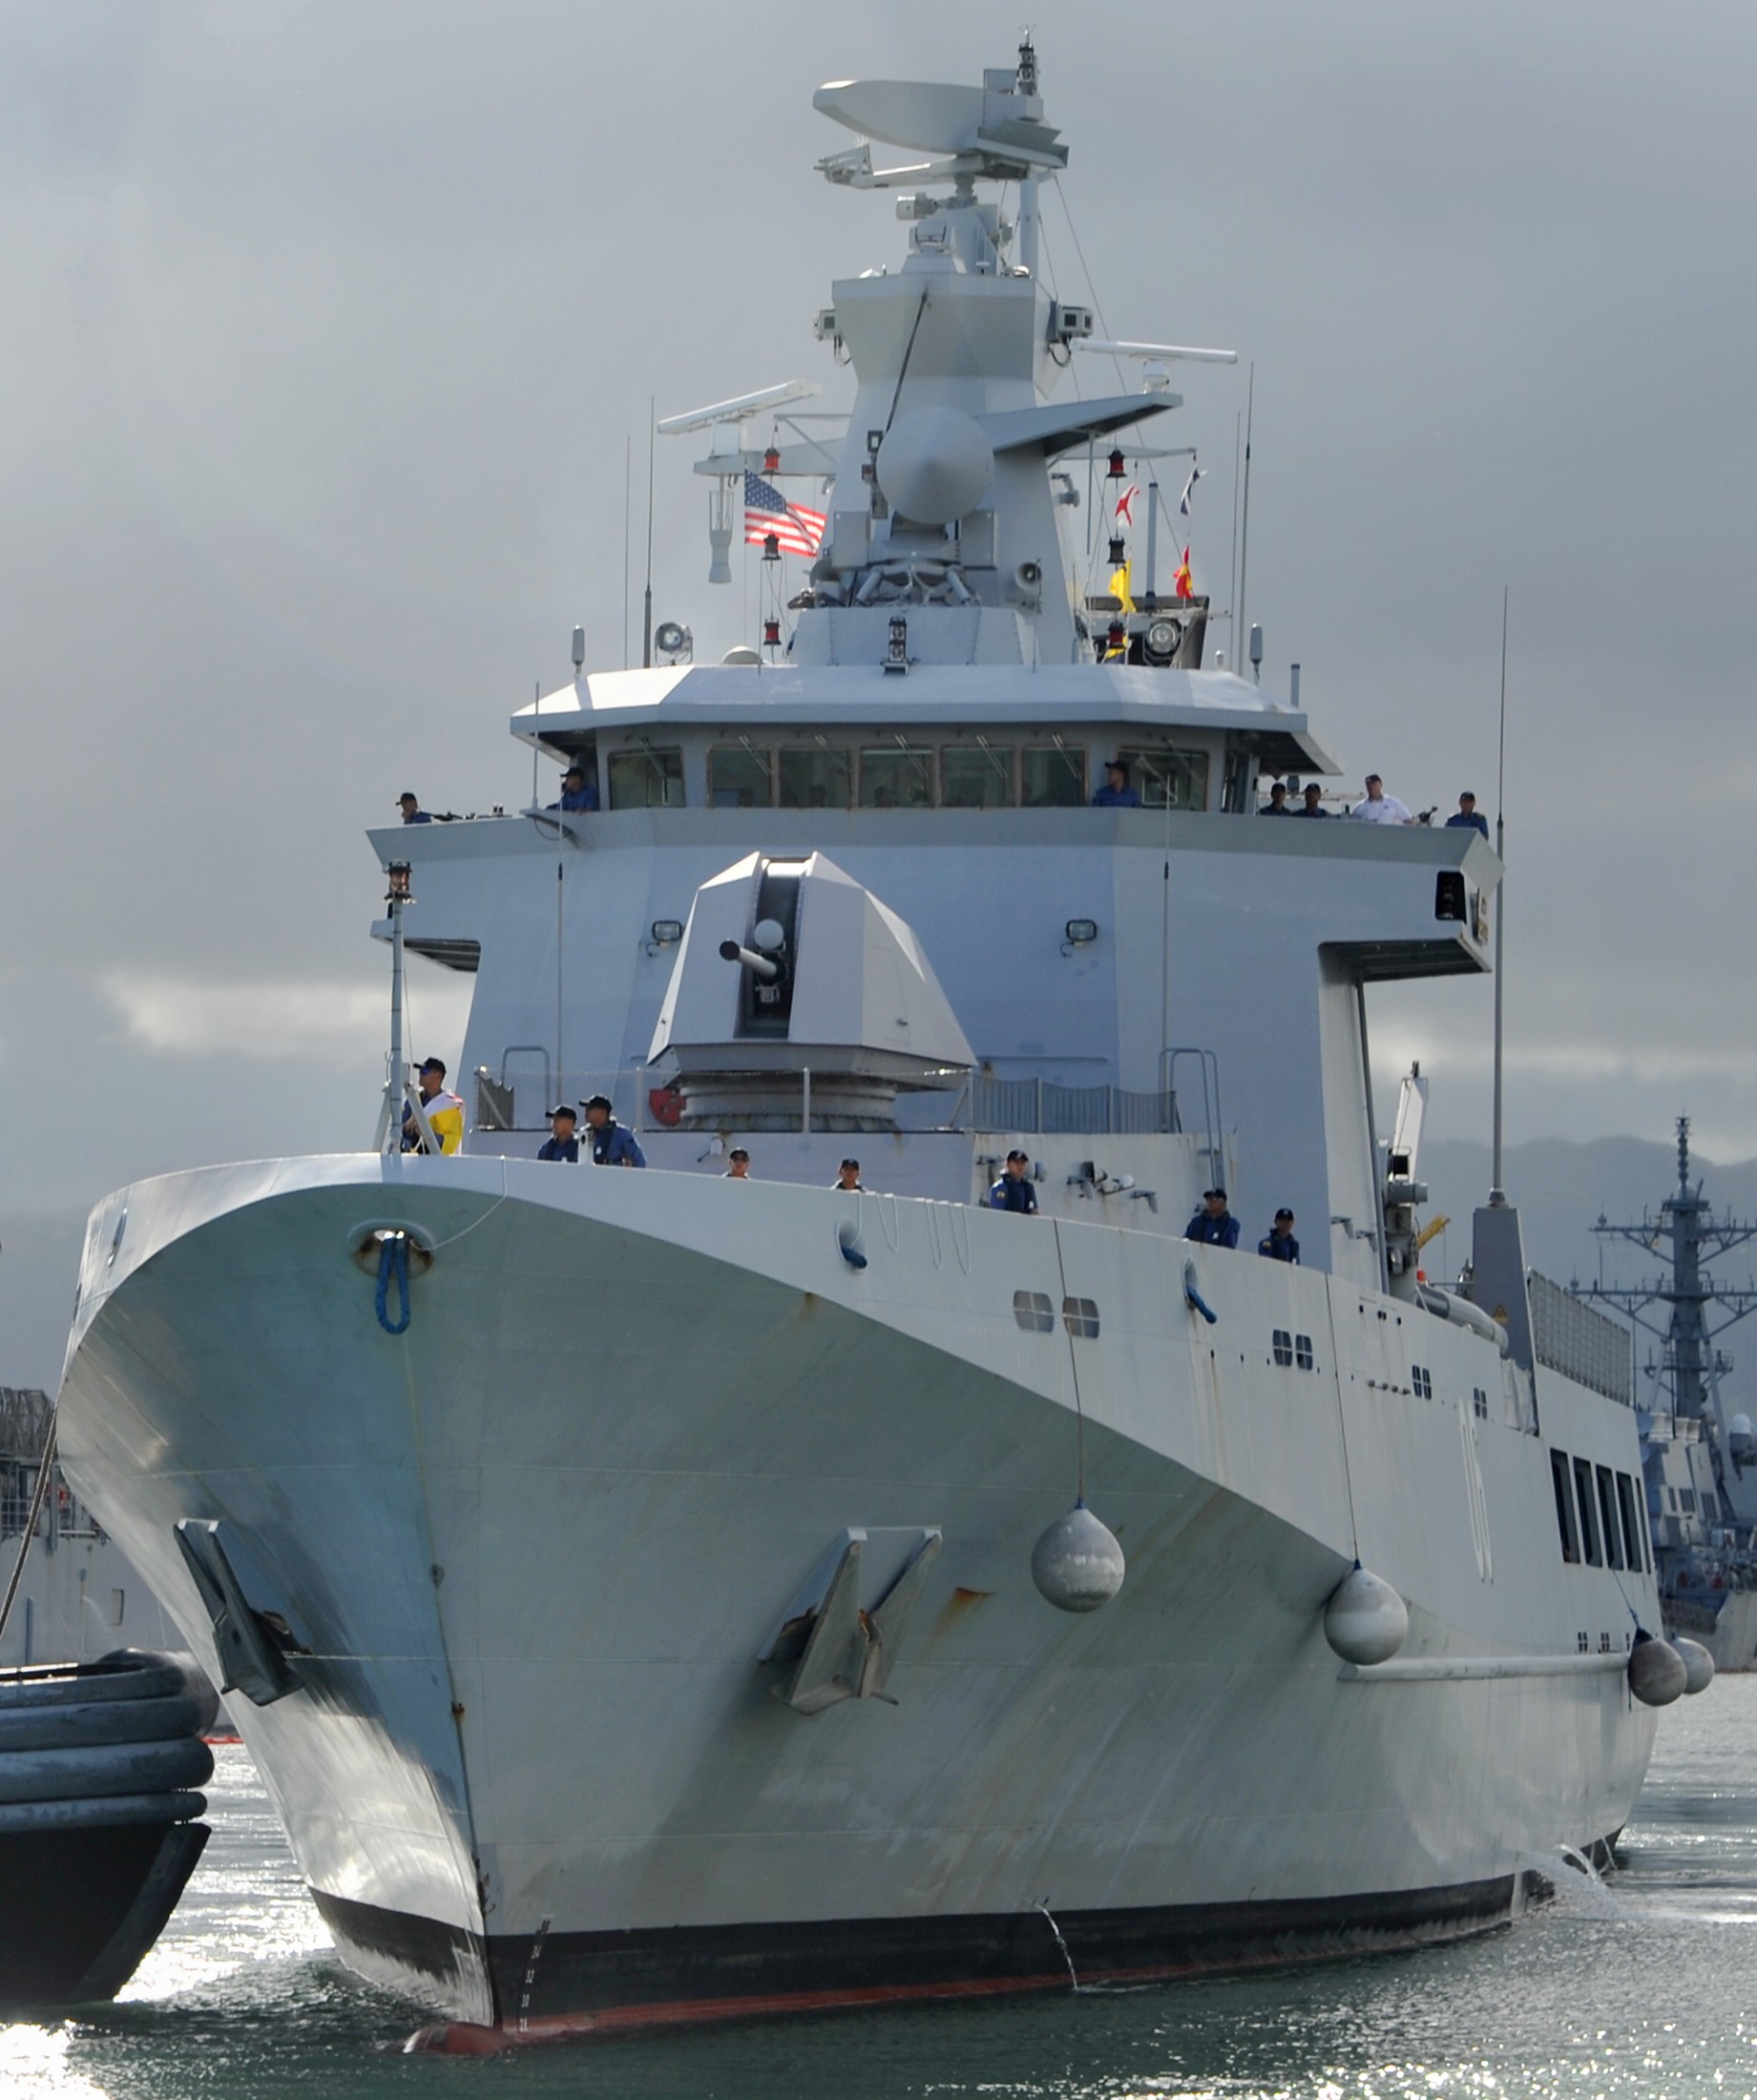 opv 06 kdb darussalam offshore patrol vessel royal brunei navy 03